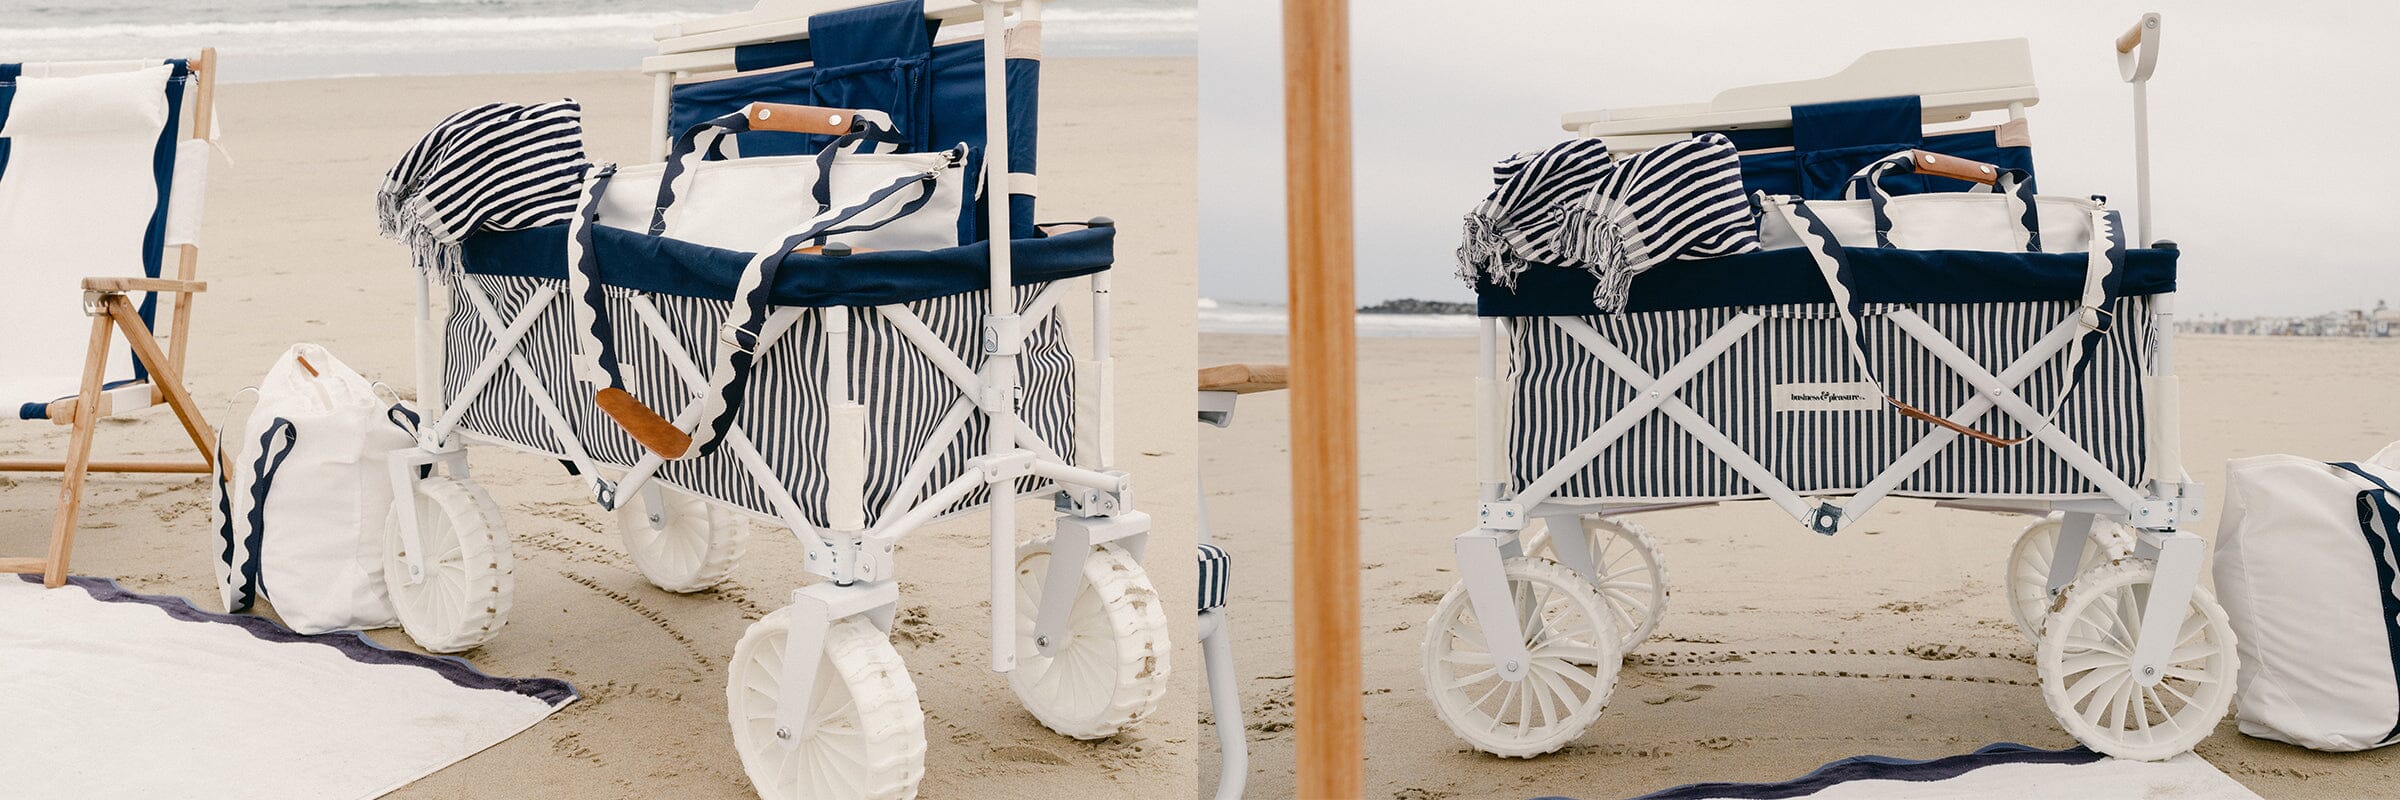 The Beach Cart